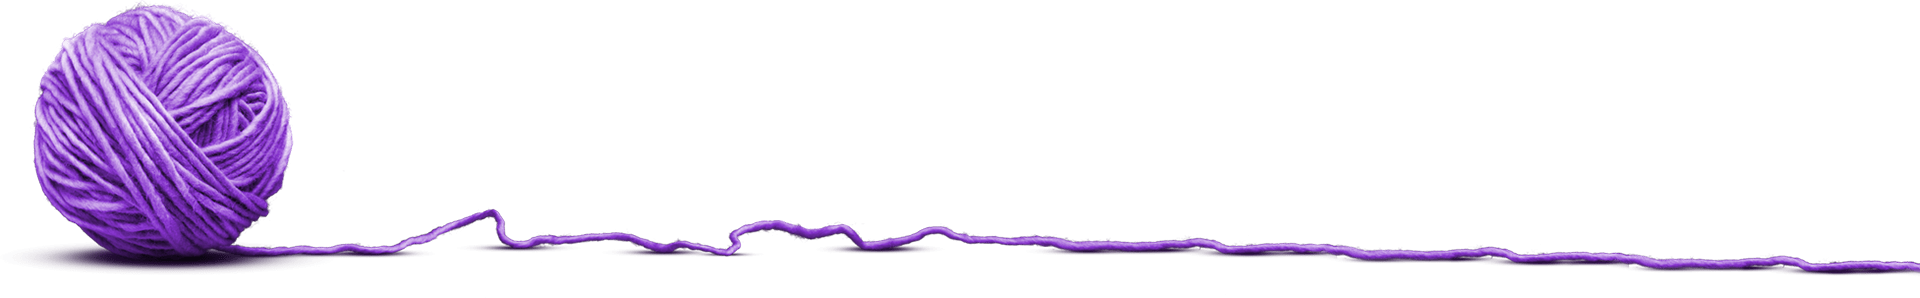 Purple ball of string